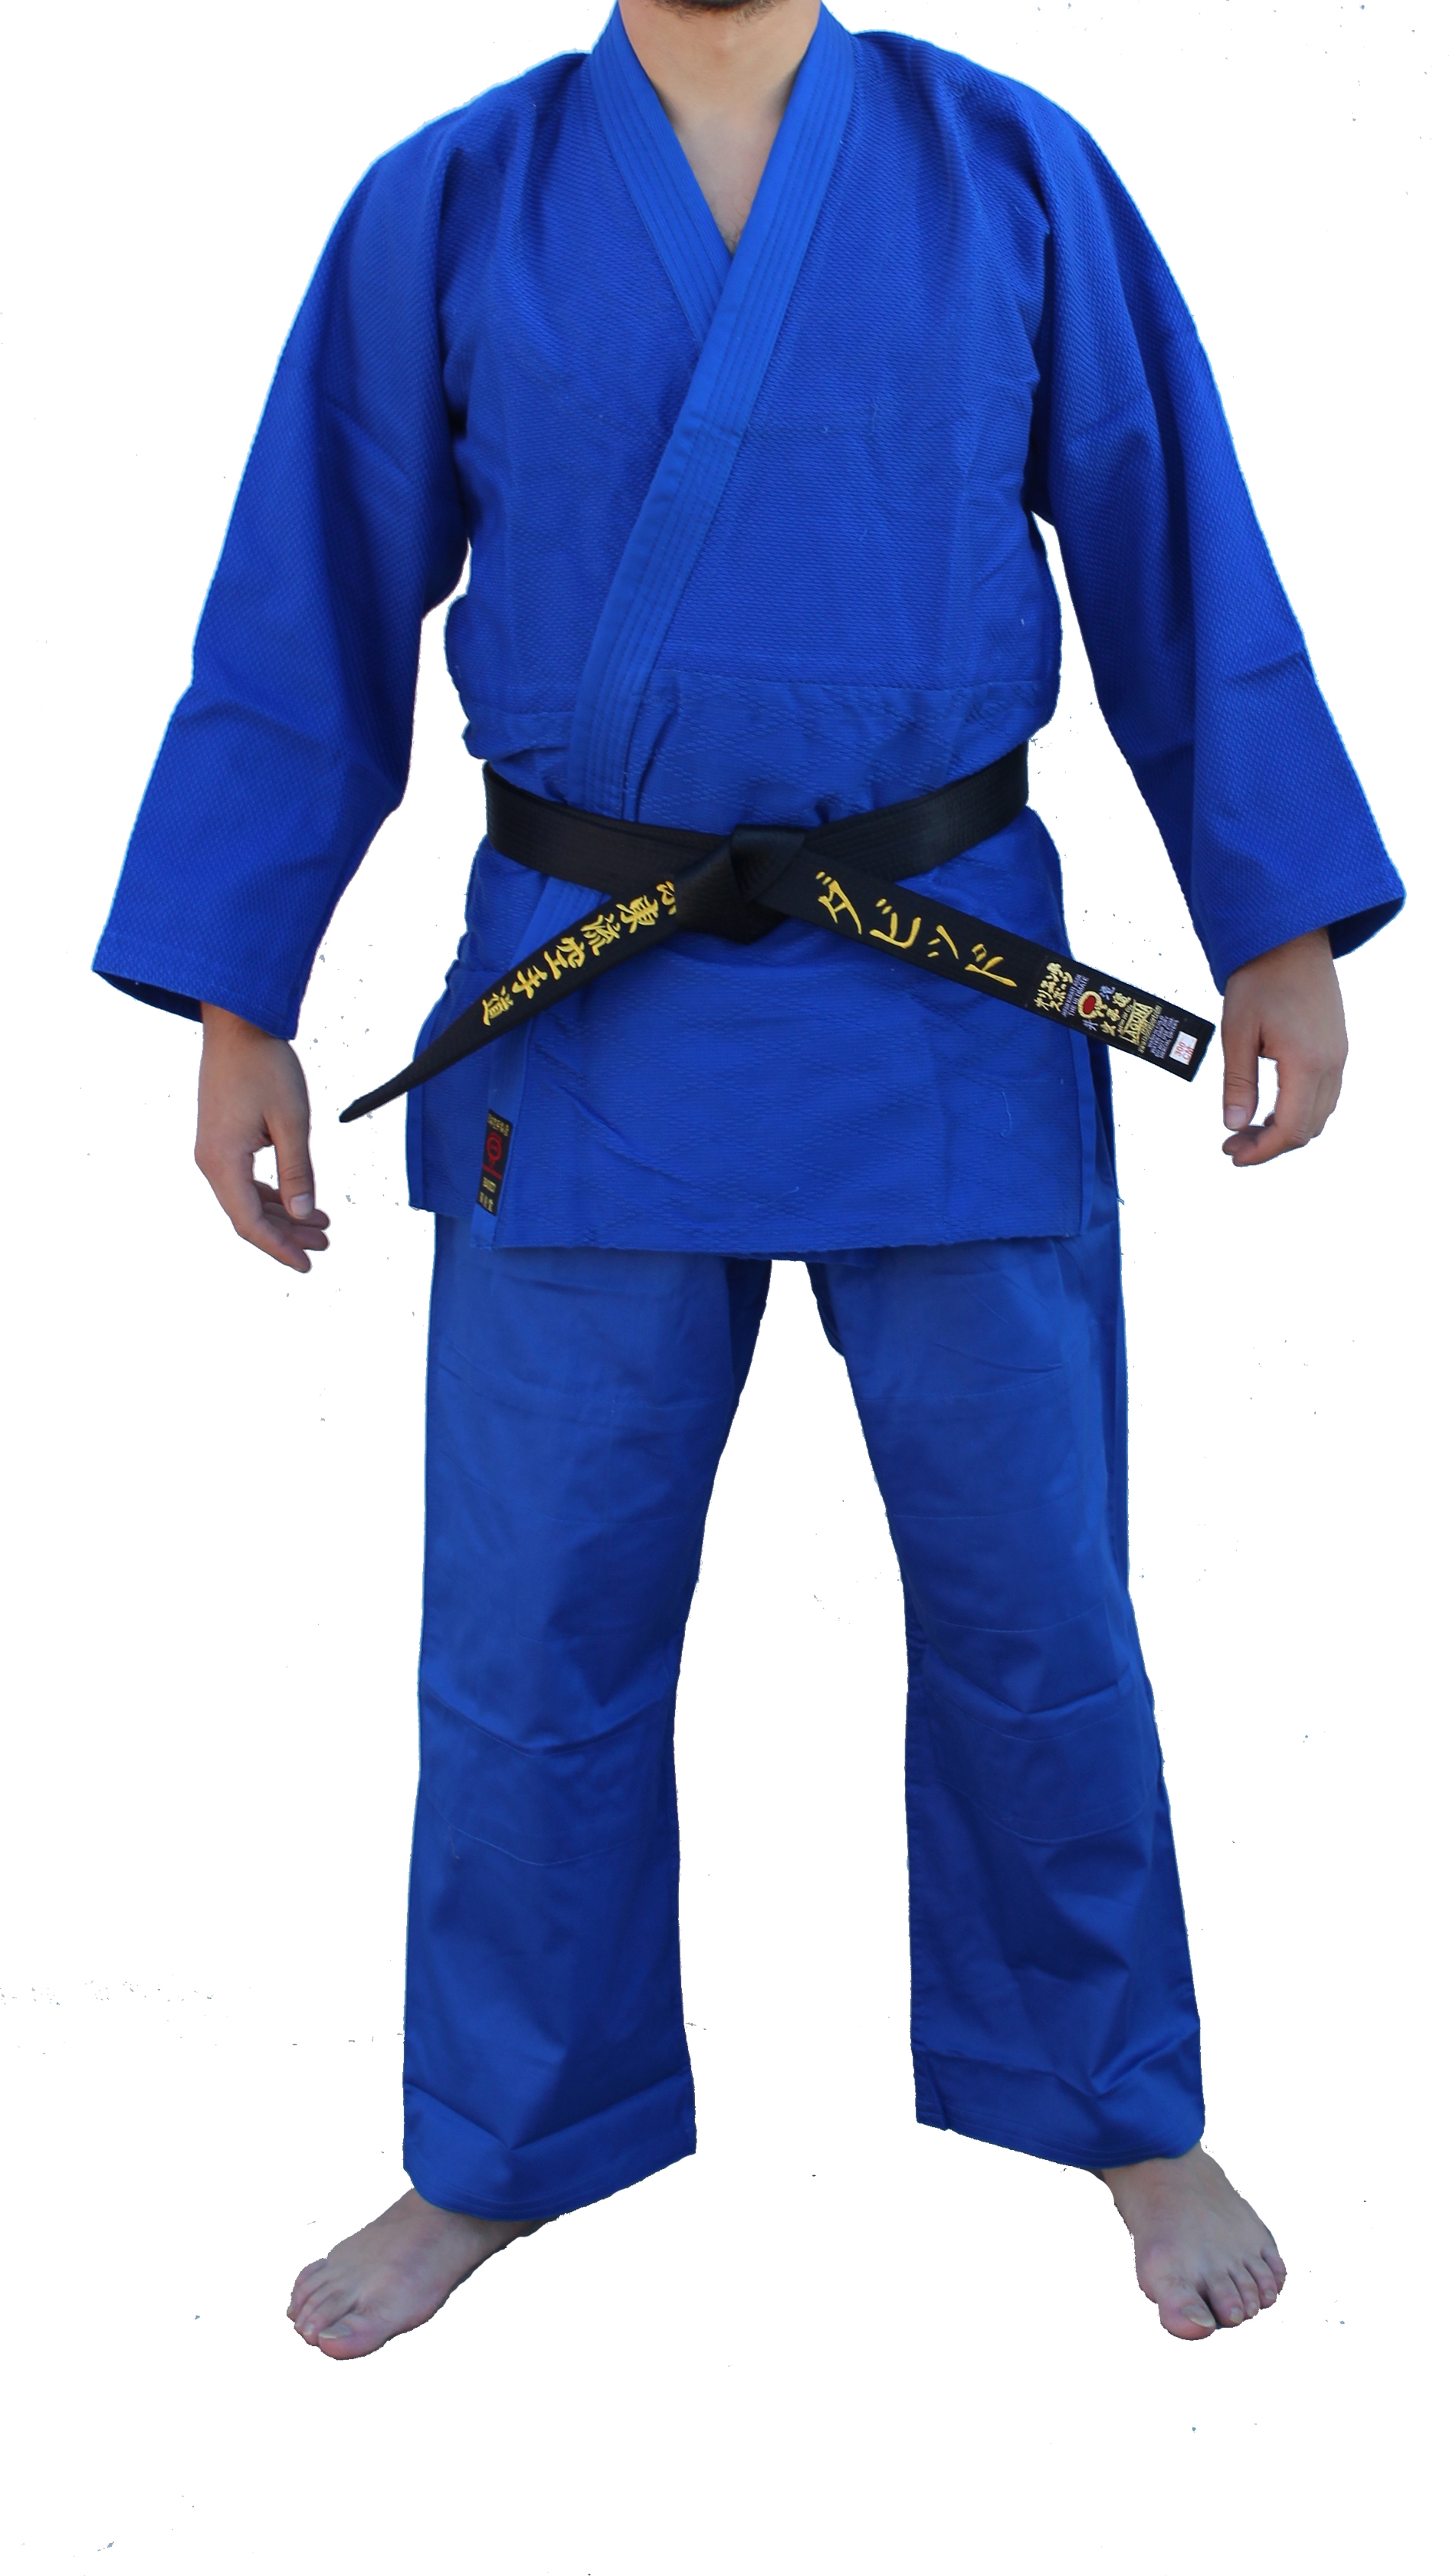 https://lagunasport.com/4421/kimono-judo-basico-azul.jpg